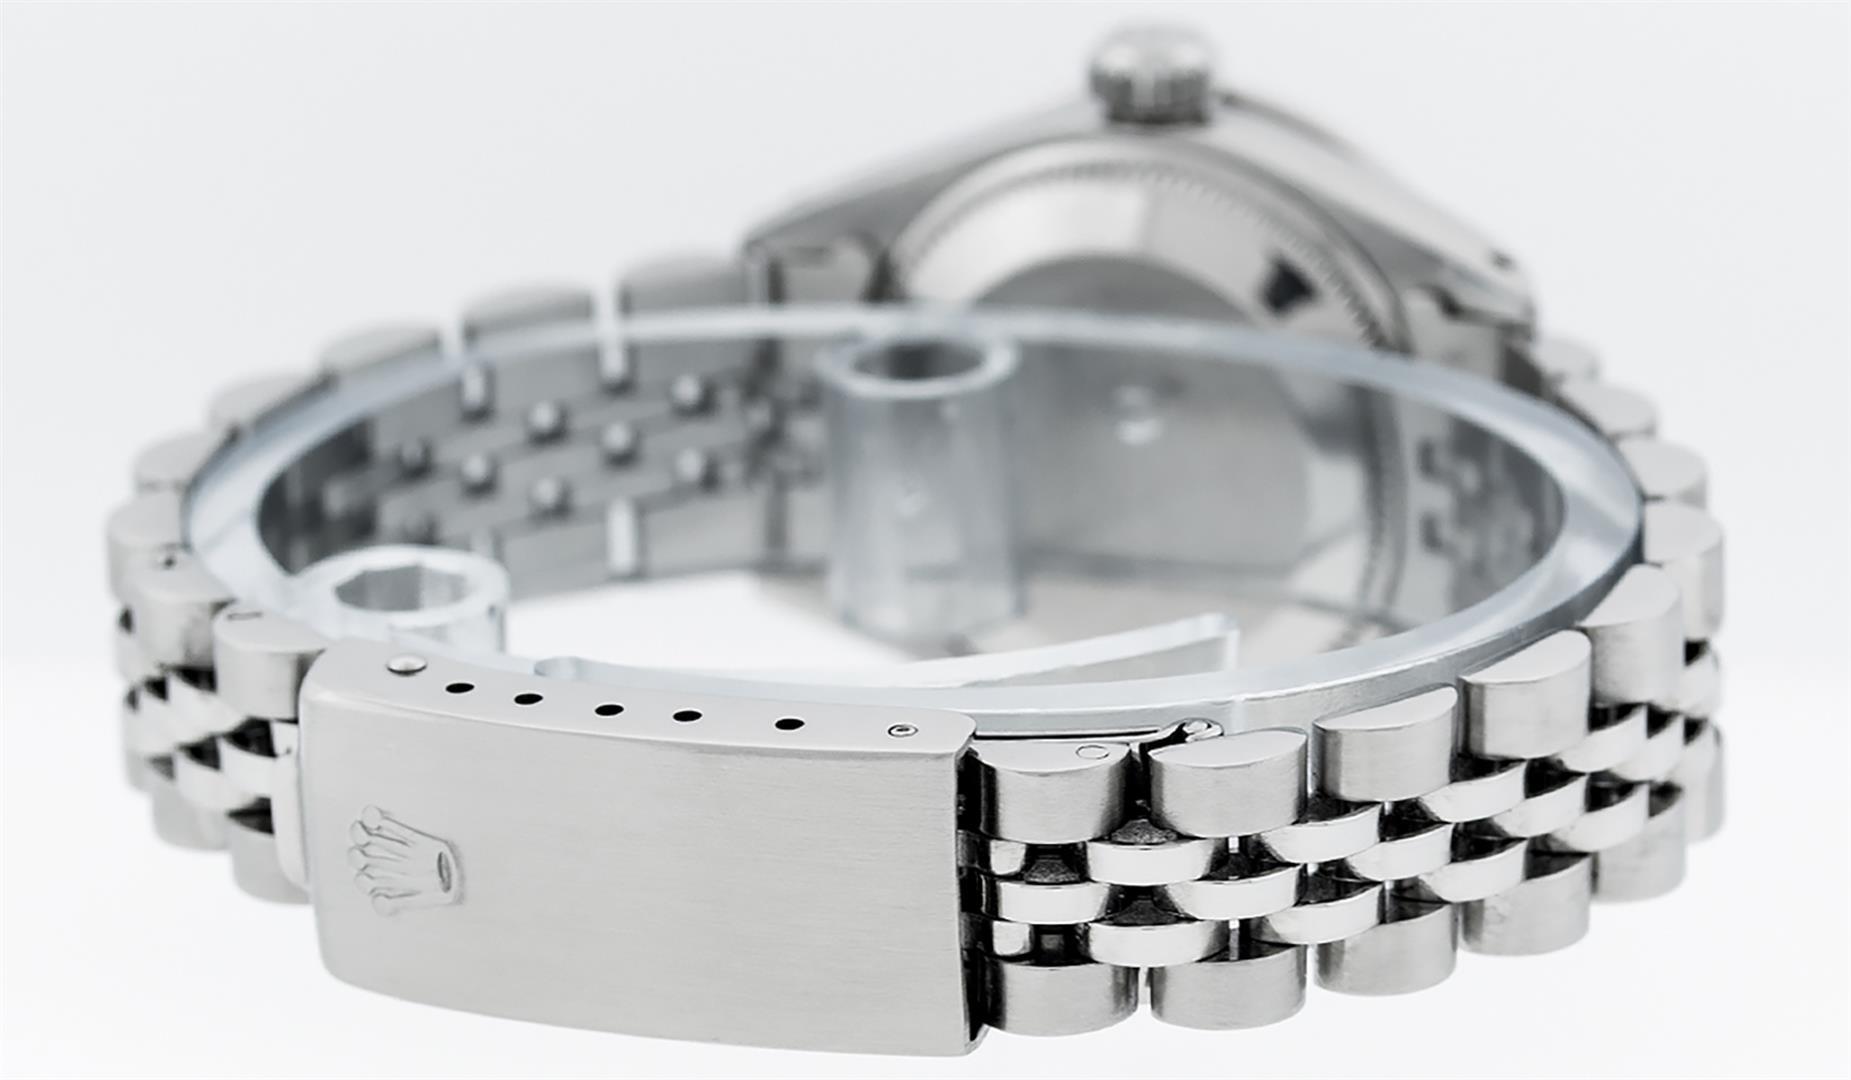 Rolex Ladies Stainless Steel Yellow Diamond & Sapphire Datejust Wristwatch